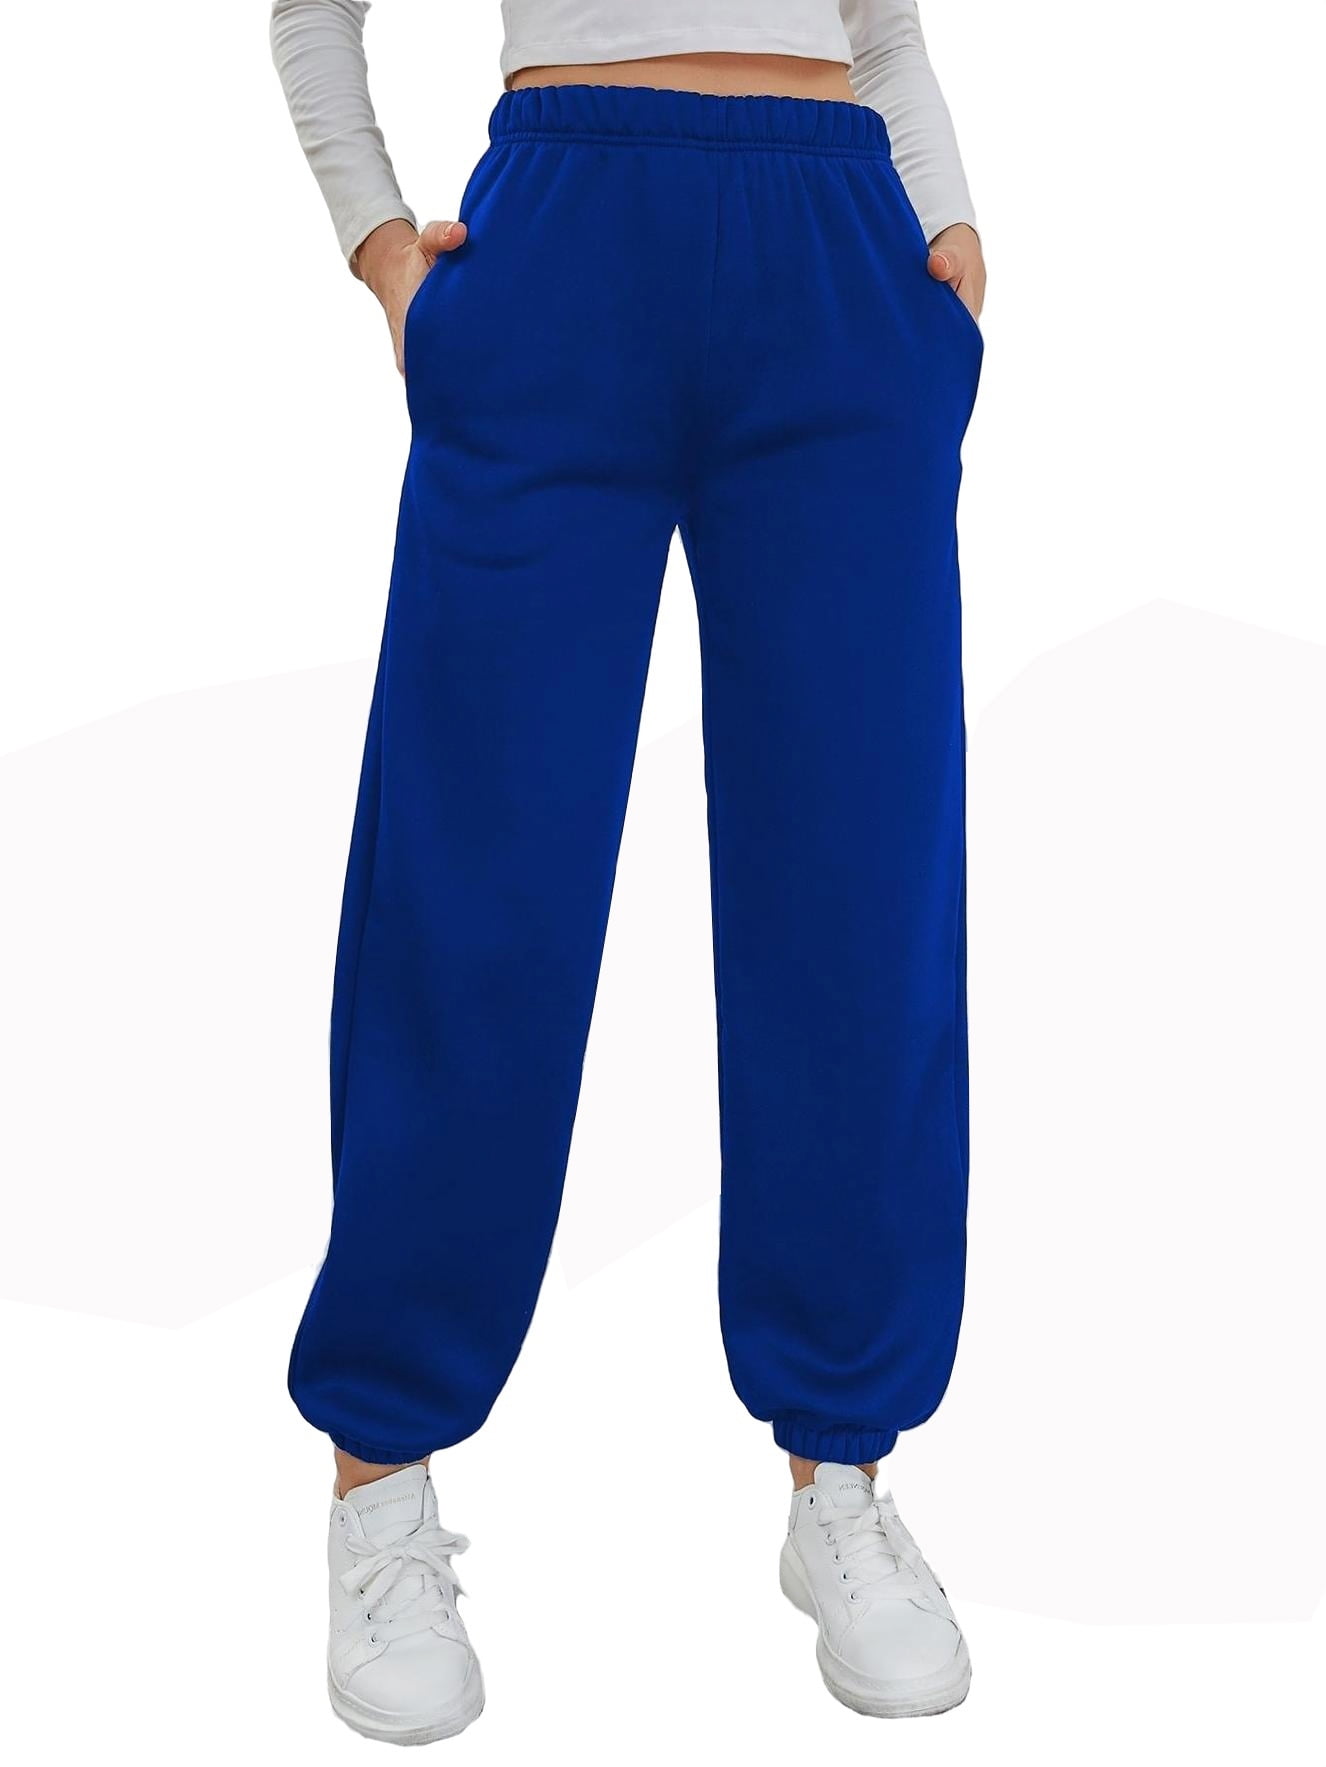 Womens Casual Pants Elastic Waist Slight Stretch Joggers Royal Blue L - Walmart.com